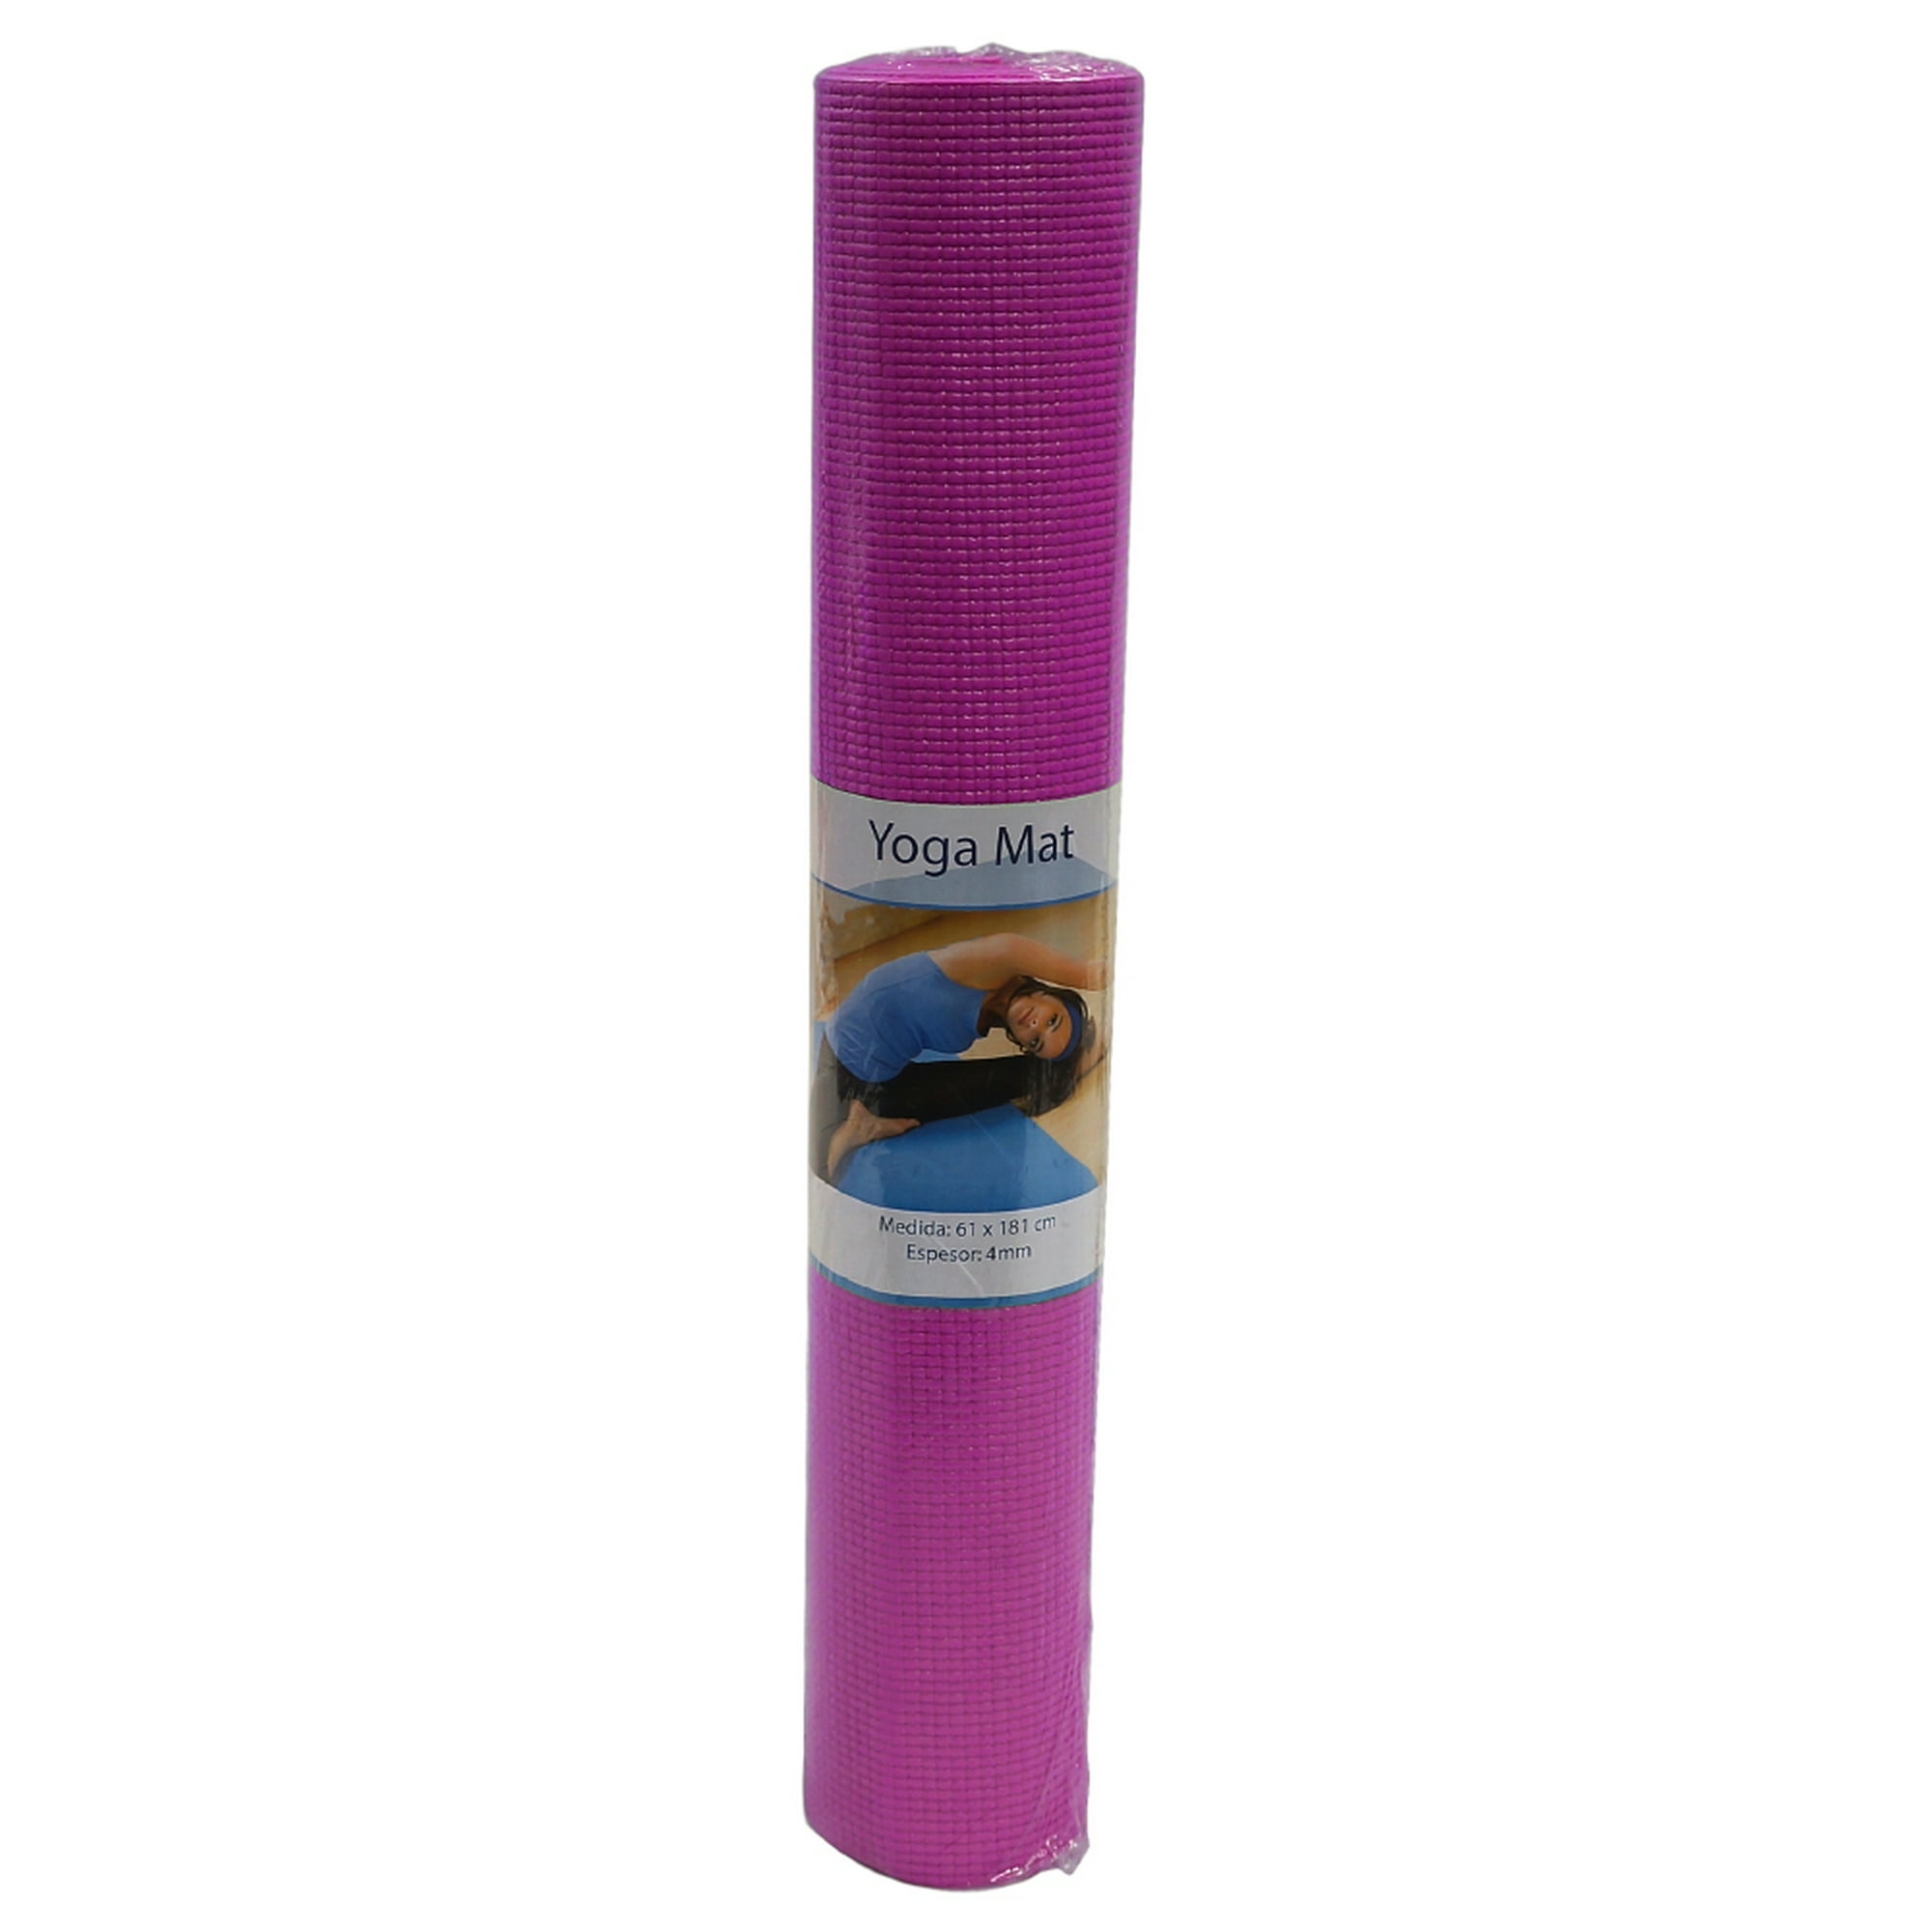 Tapete para Yoga Negro 61 x 181cm 5mm Espesor - Yoga Mat acolchado para  hacer ejercicio - Tapete Antiderrapante para Gimnasio Livingreen Tapete  para